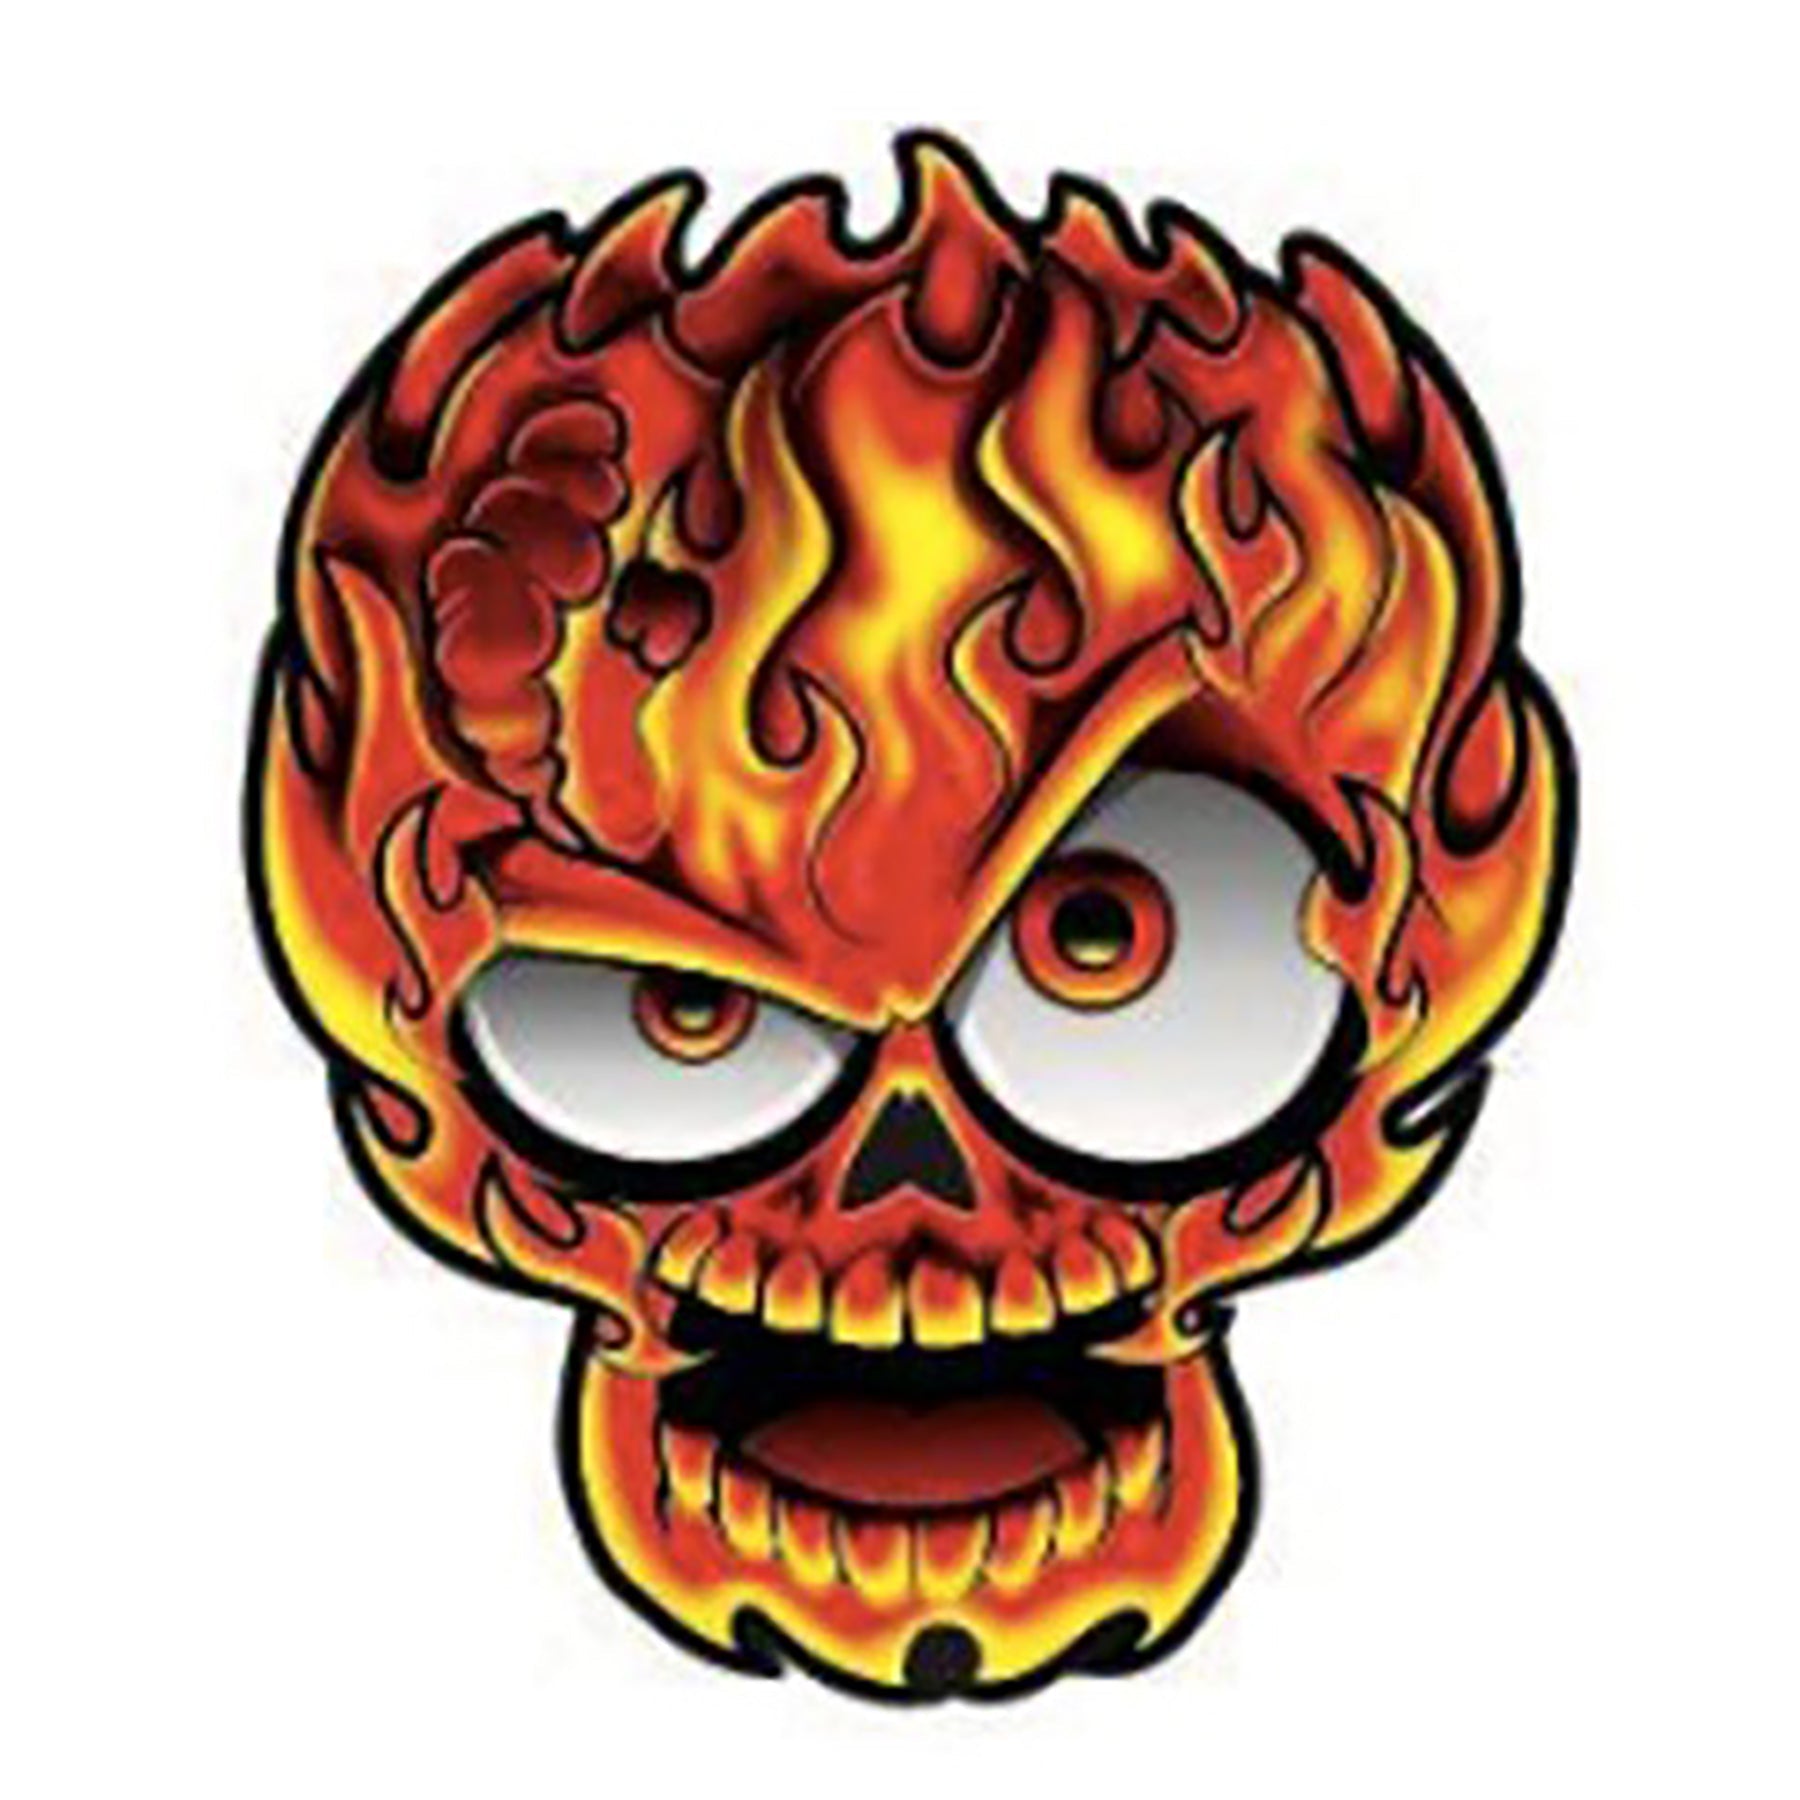 Mirror Critters Car Air Freshener Flame Skull - New Car Fragrance 3x3in